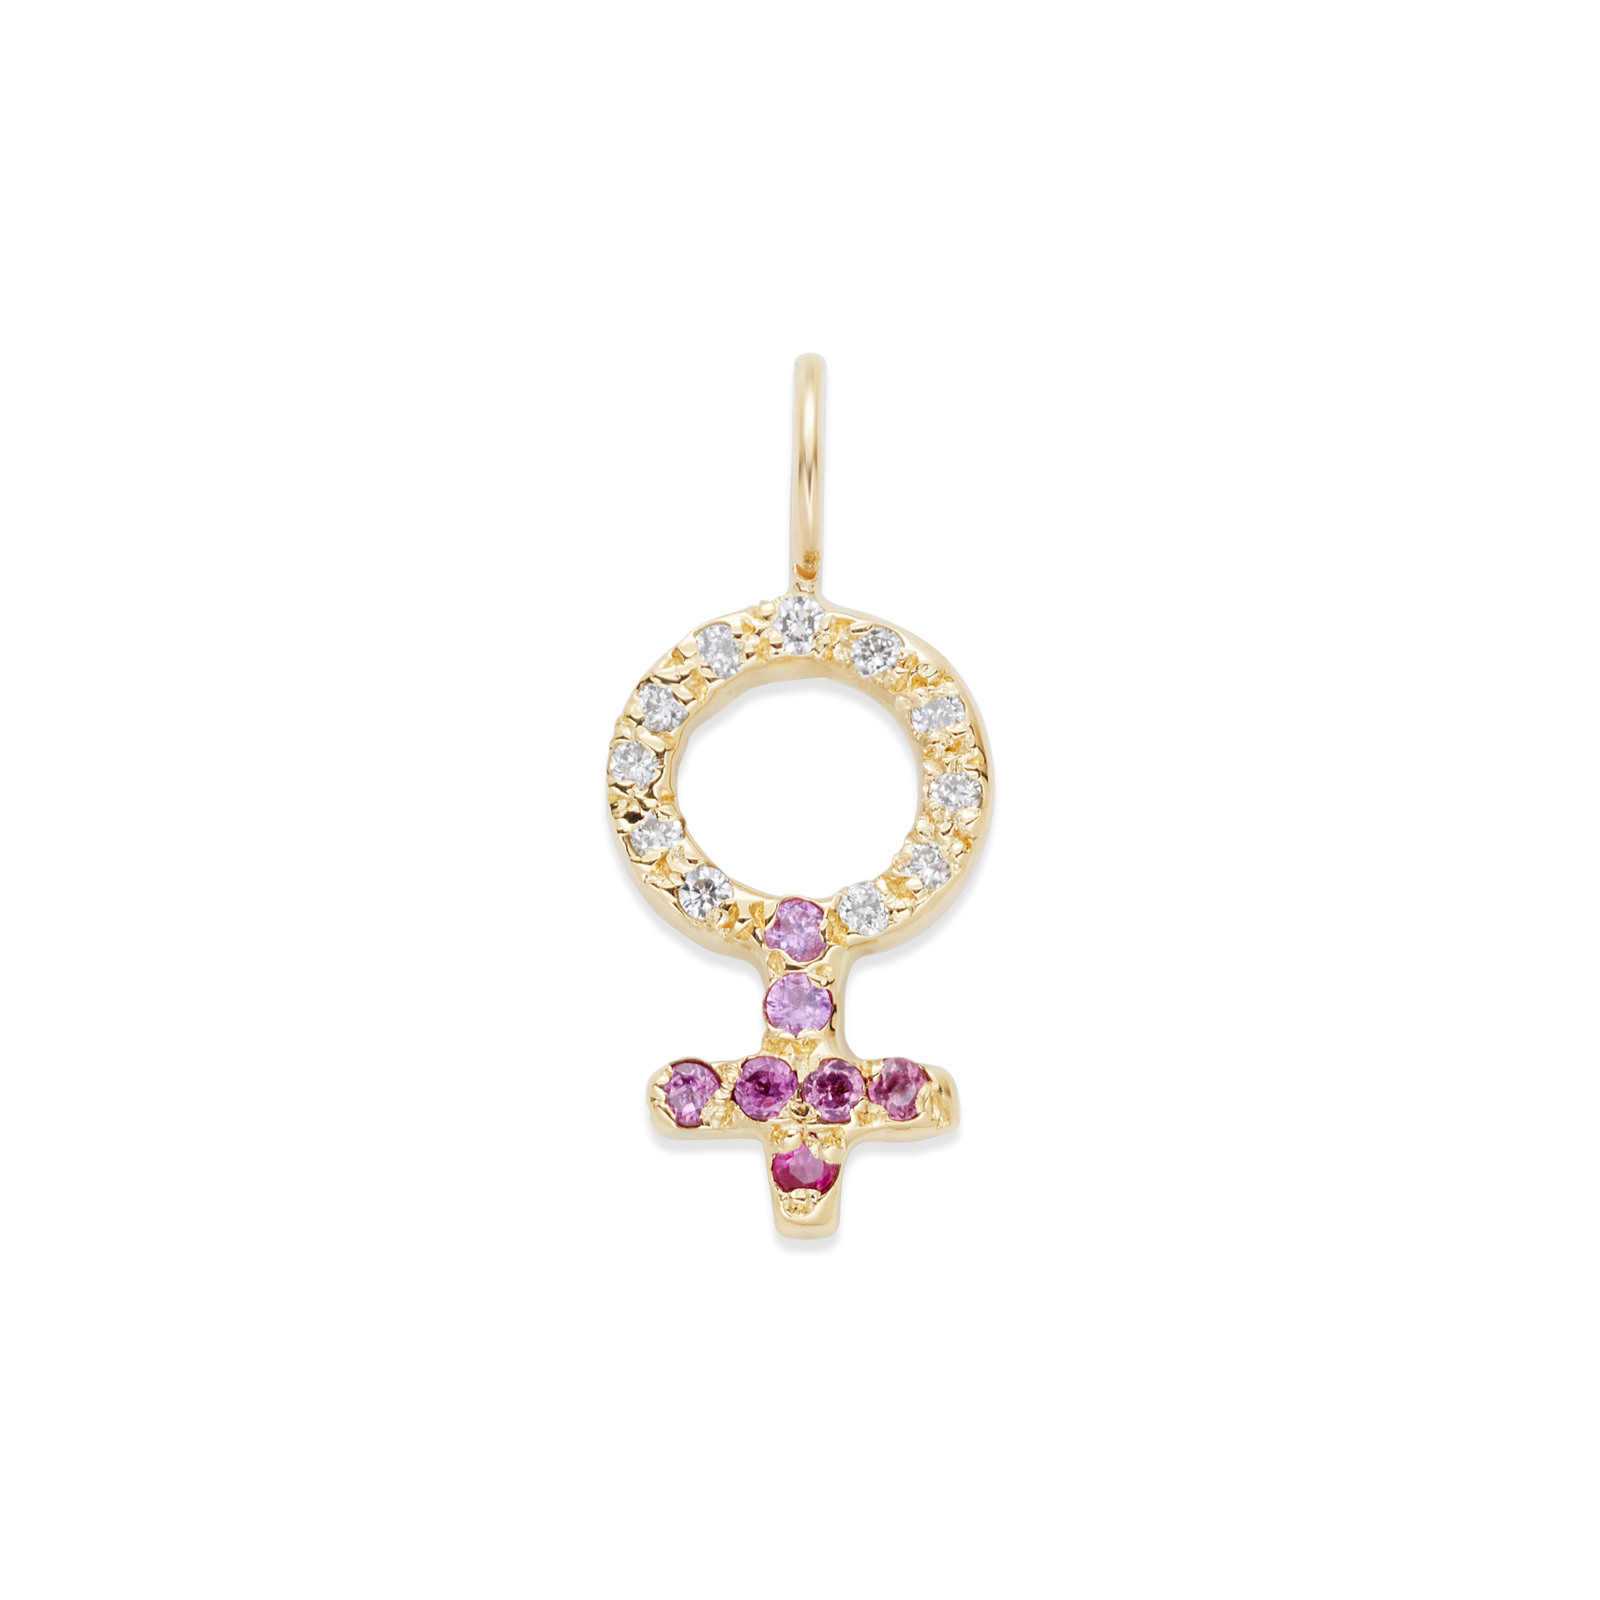 Female Symbol 14k Yellow Gold Charm with diamonds and gemstones